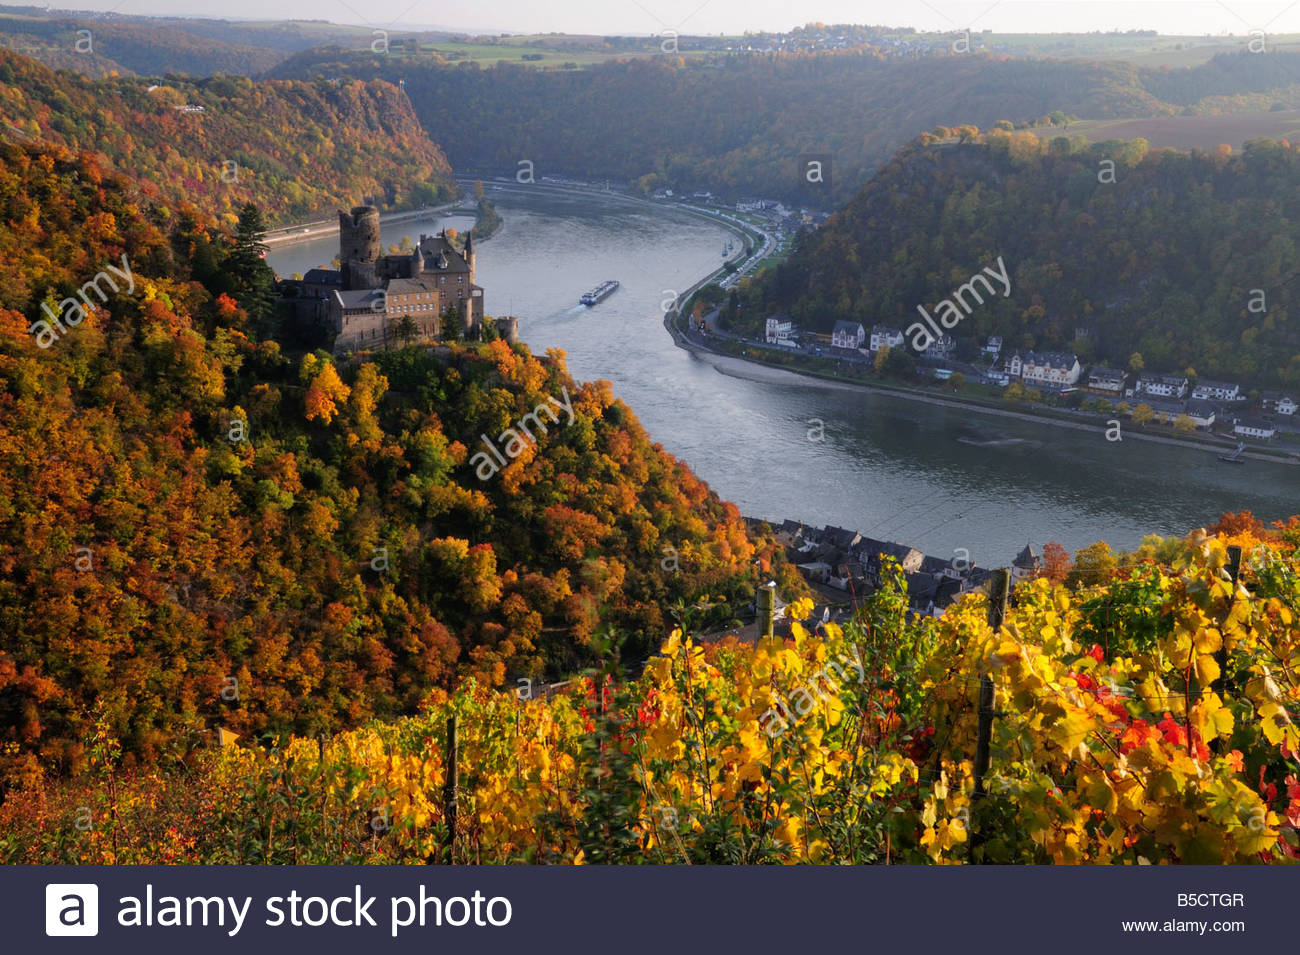 rhine-valley-castle-katz-in-autumn-germany-B5CTGR.jpg